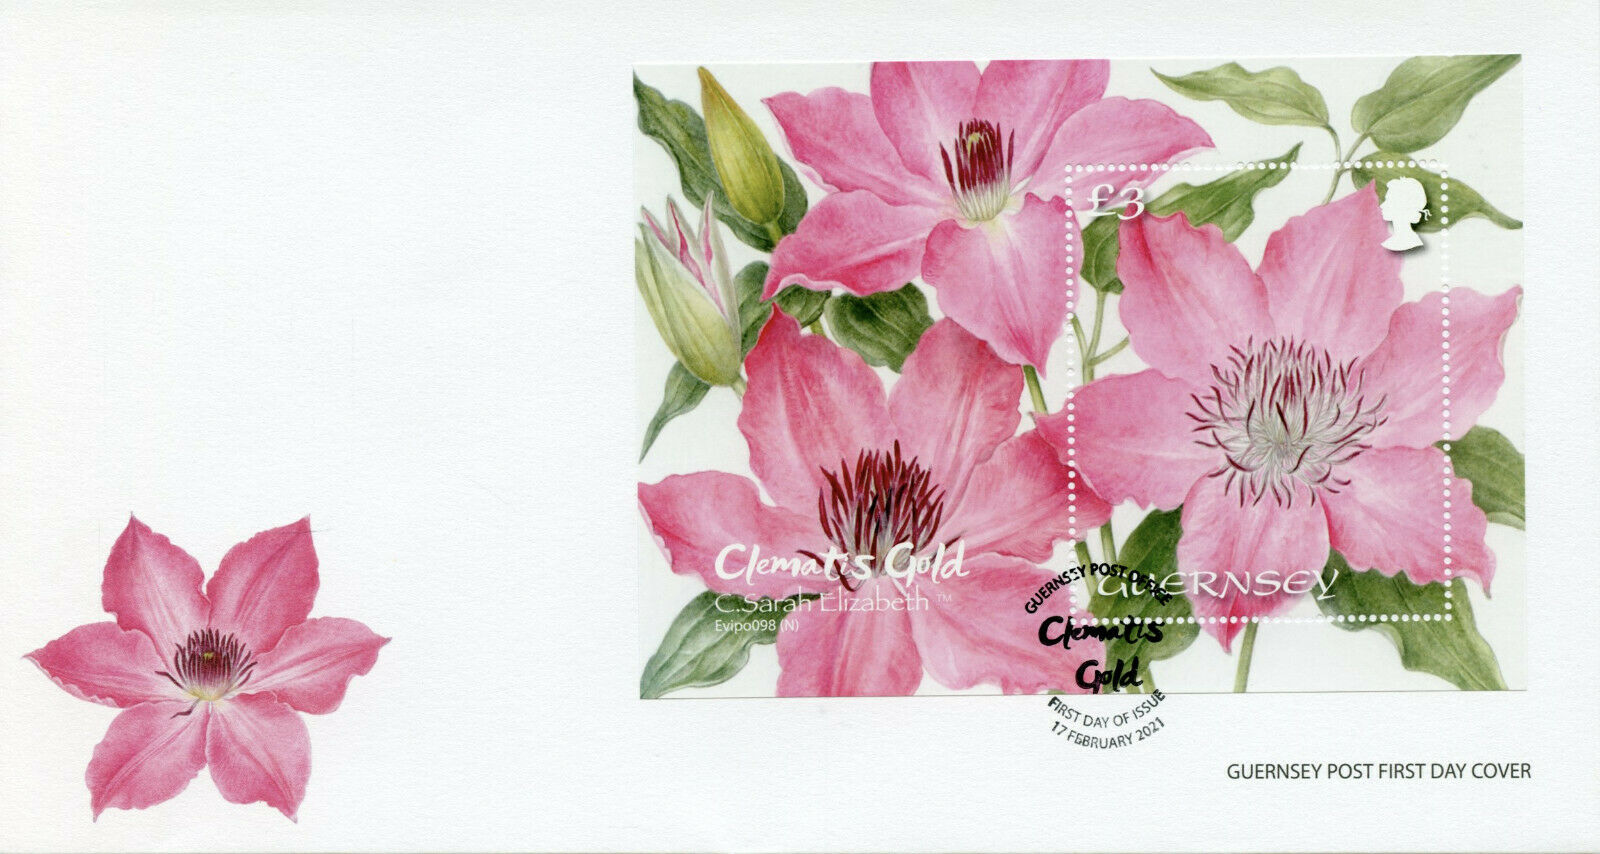 Guernsey Flowers Stamps 2021 FDC Clematis Gold C. Sarah Elizabeth 1v M/S P/P